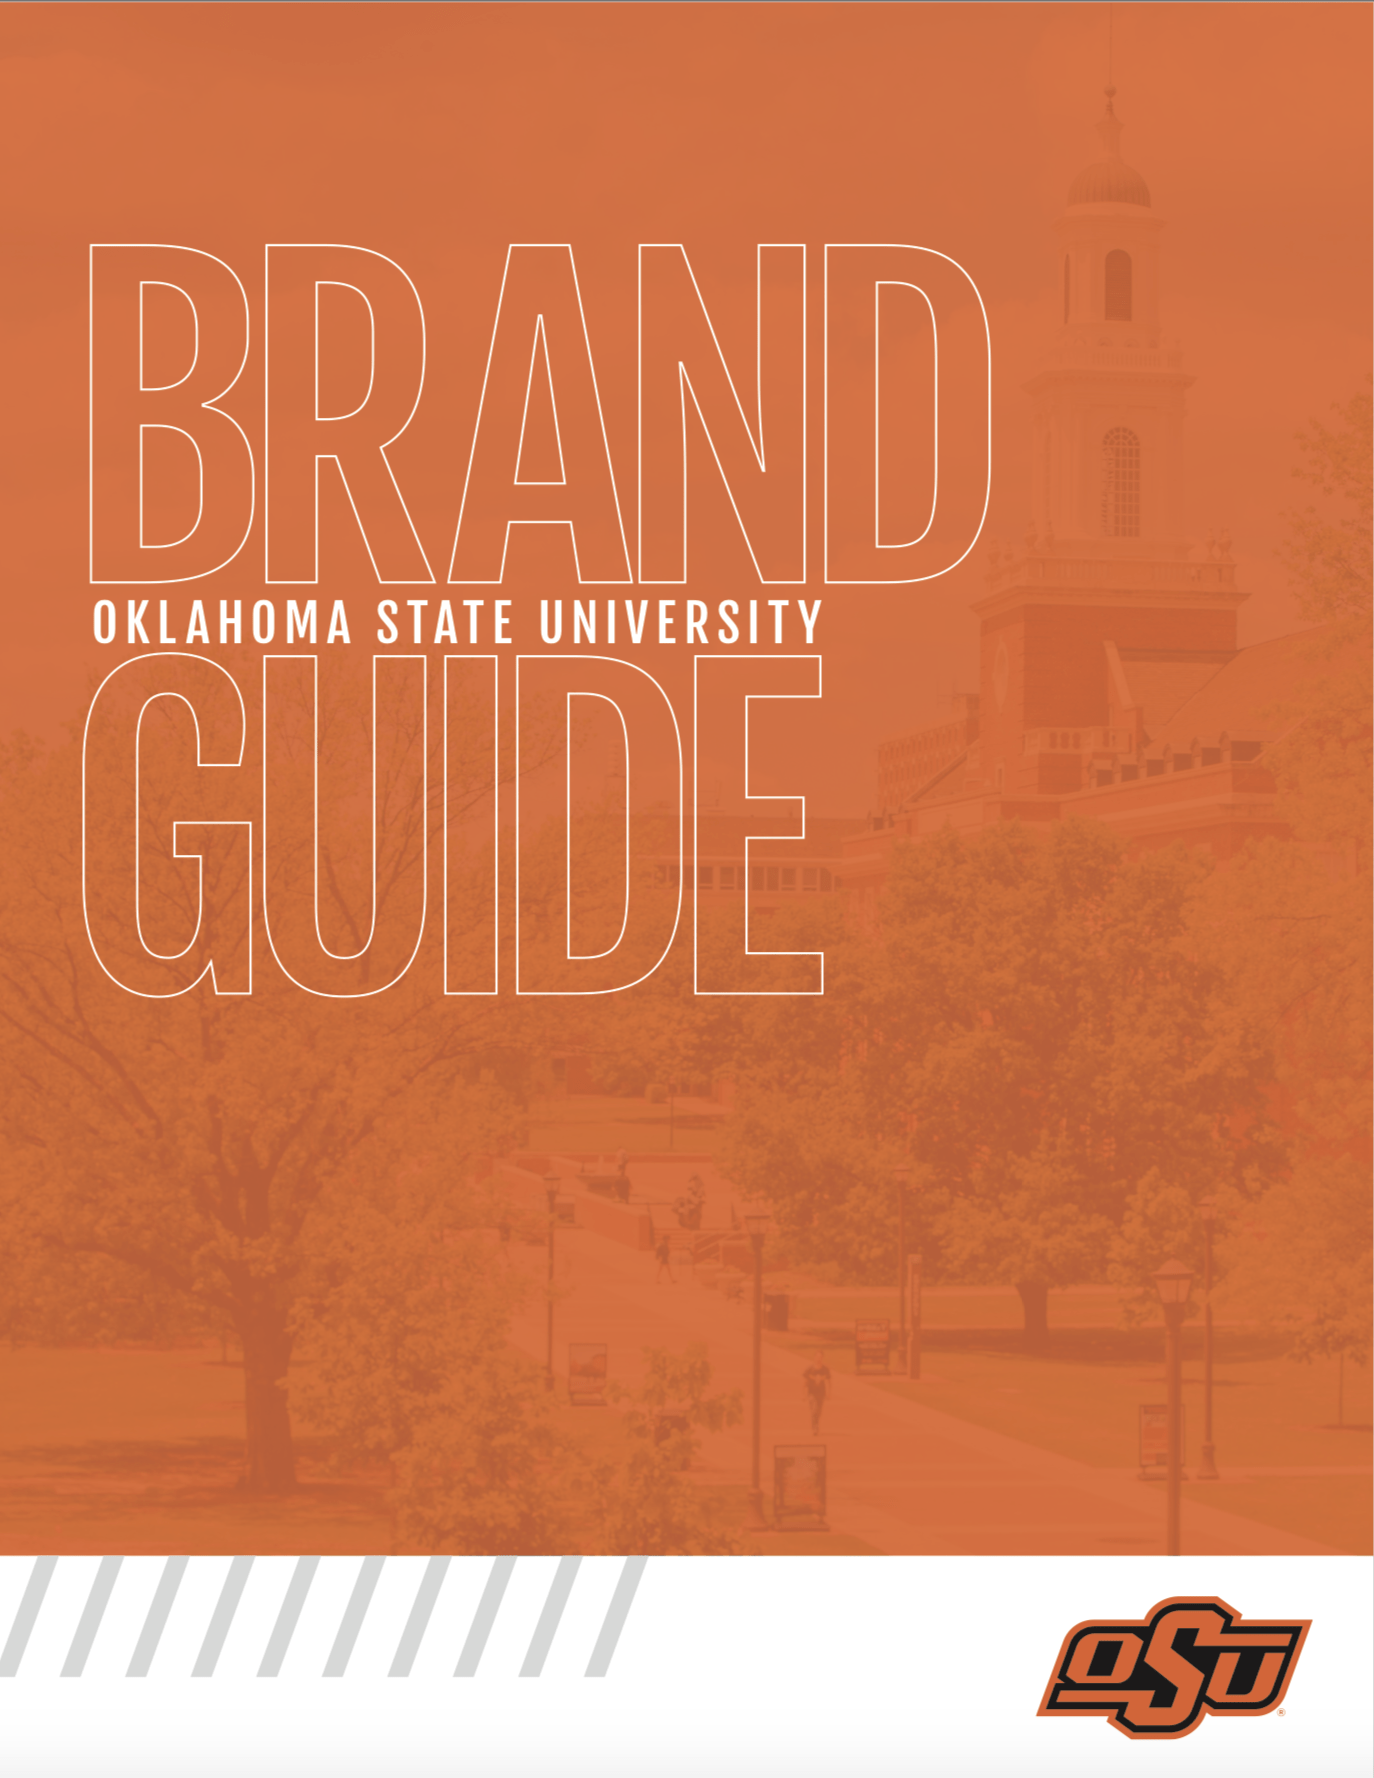 The Oklahoma State University Rebrand: One University, One Logo for All - Logo - https://s39939.pcdn.co/wp-content/uploads/2020/08/Branding-or-Rebranding_Oklahoma-State.png